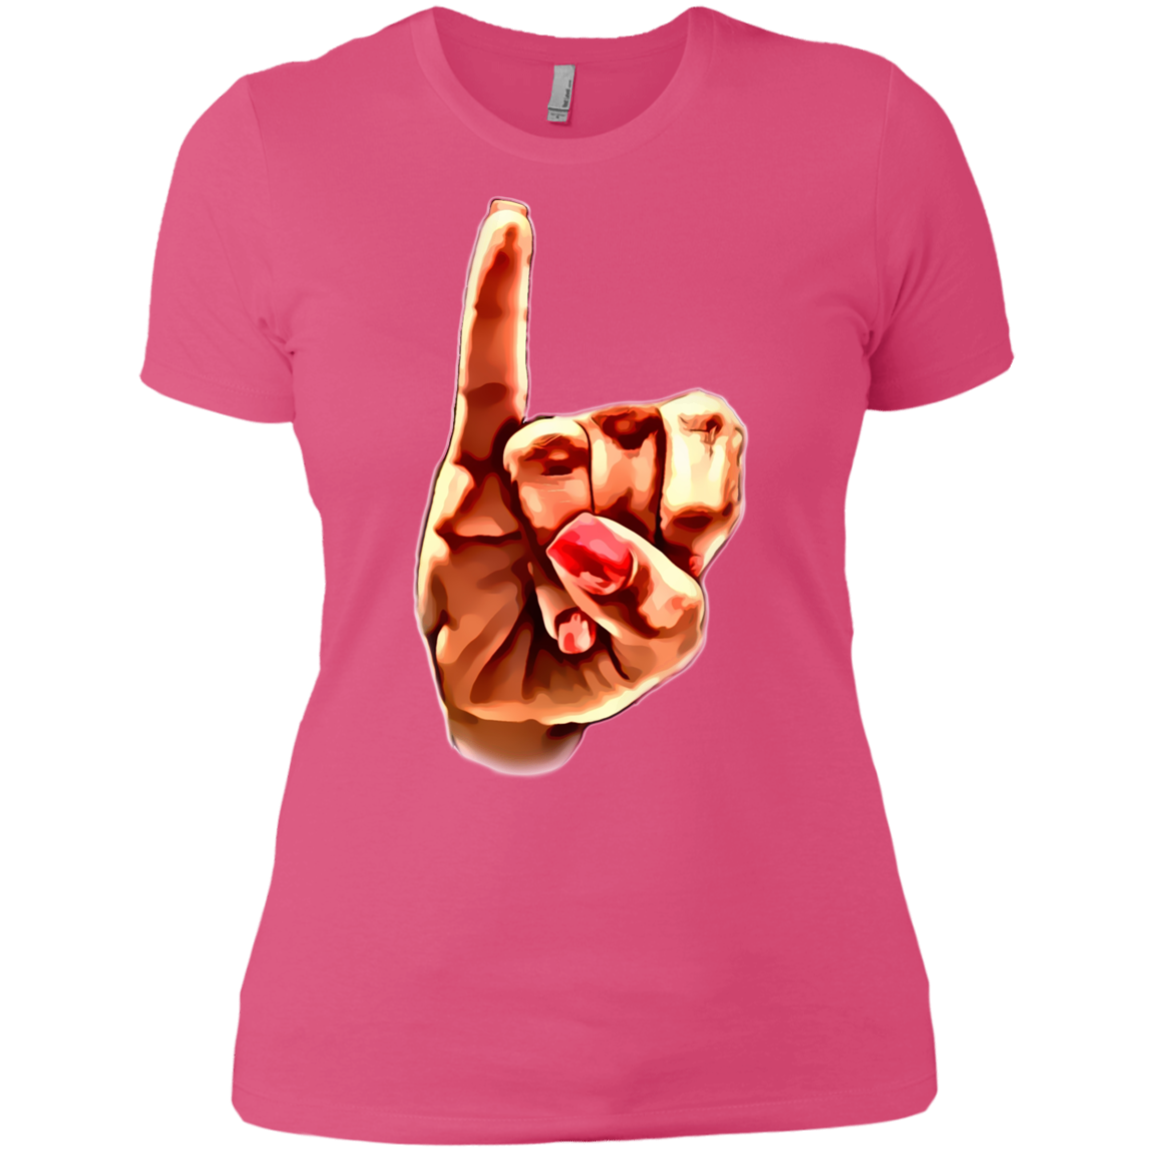 AKA Pinky Up Ladies' Boyfriend T-Shirt